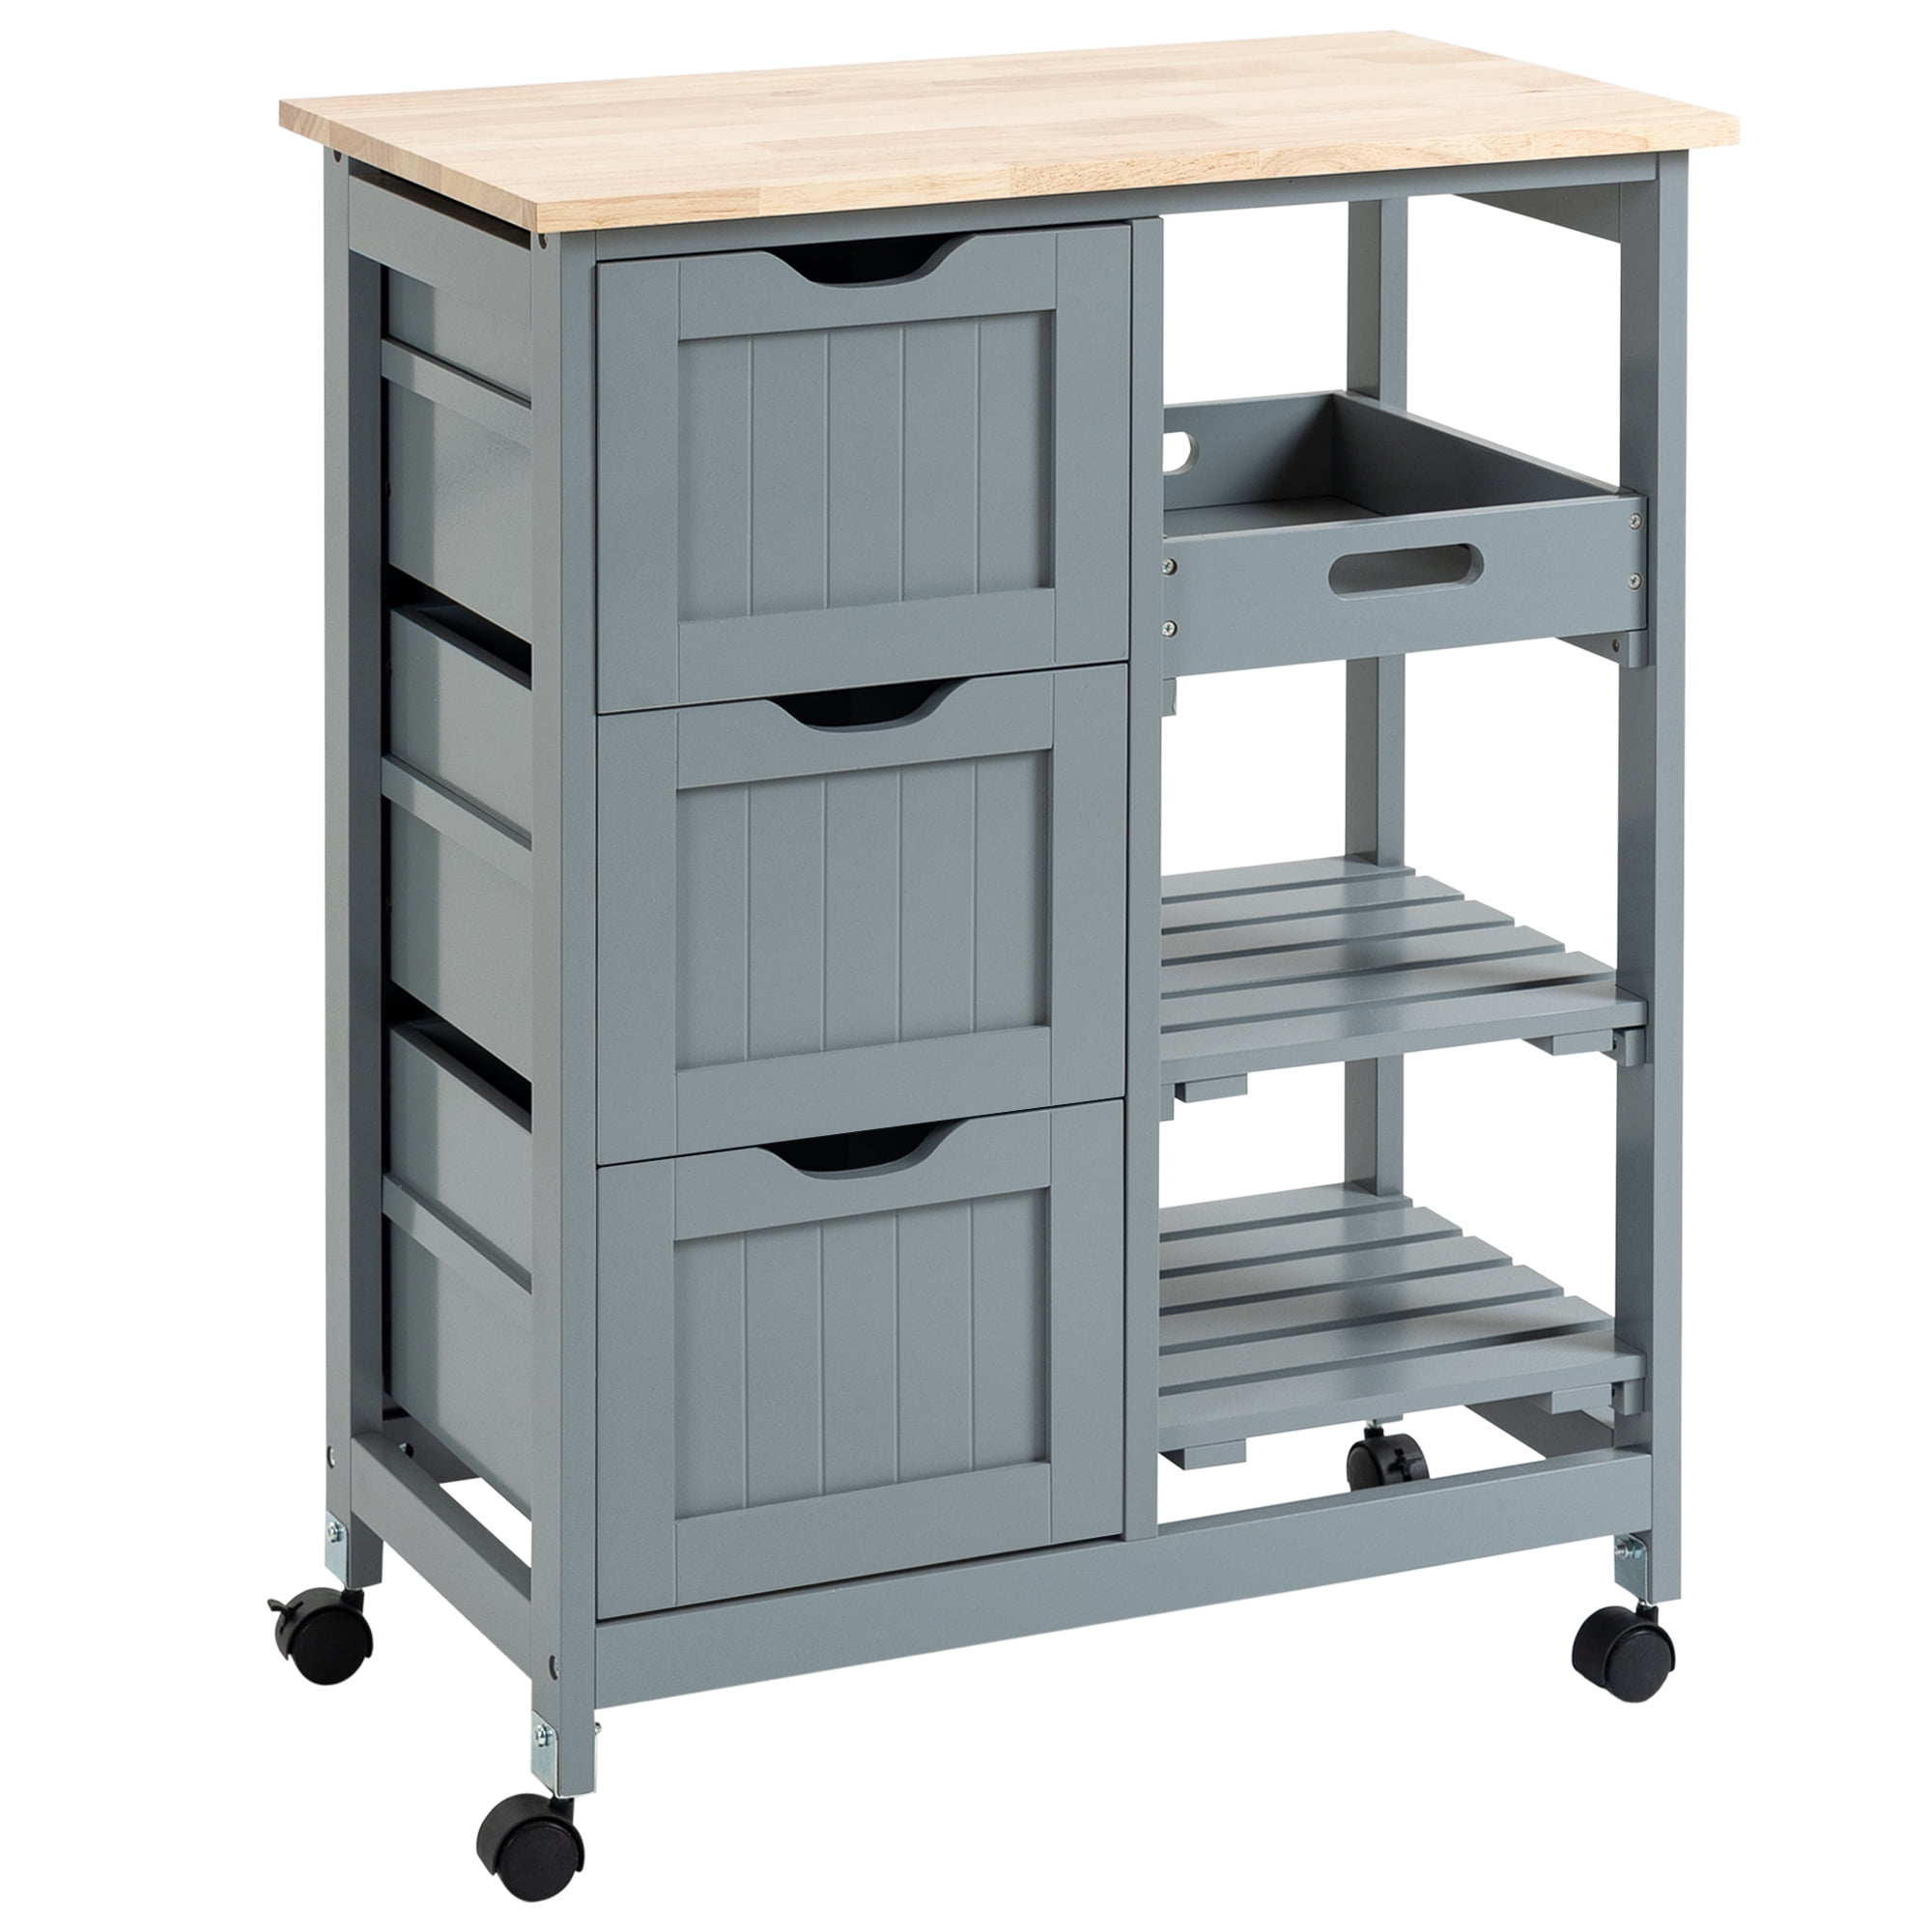 HOMCOM Rolling Kitchen Storage Trolley Cart Cupboard Island Cabinet Shelves 2 Handle with Locking Wheels 